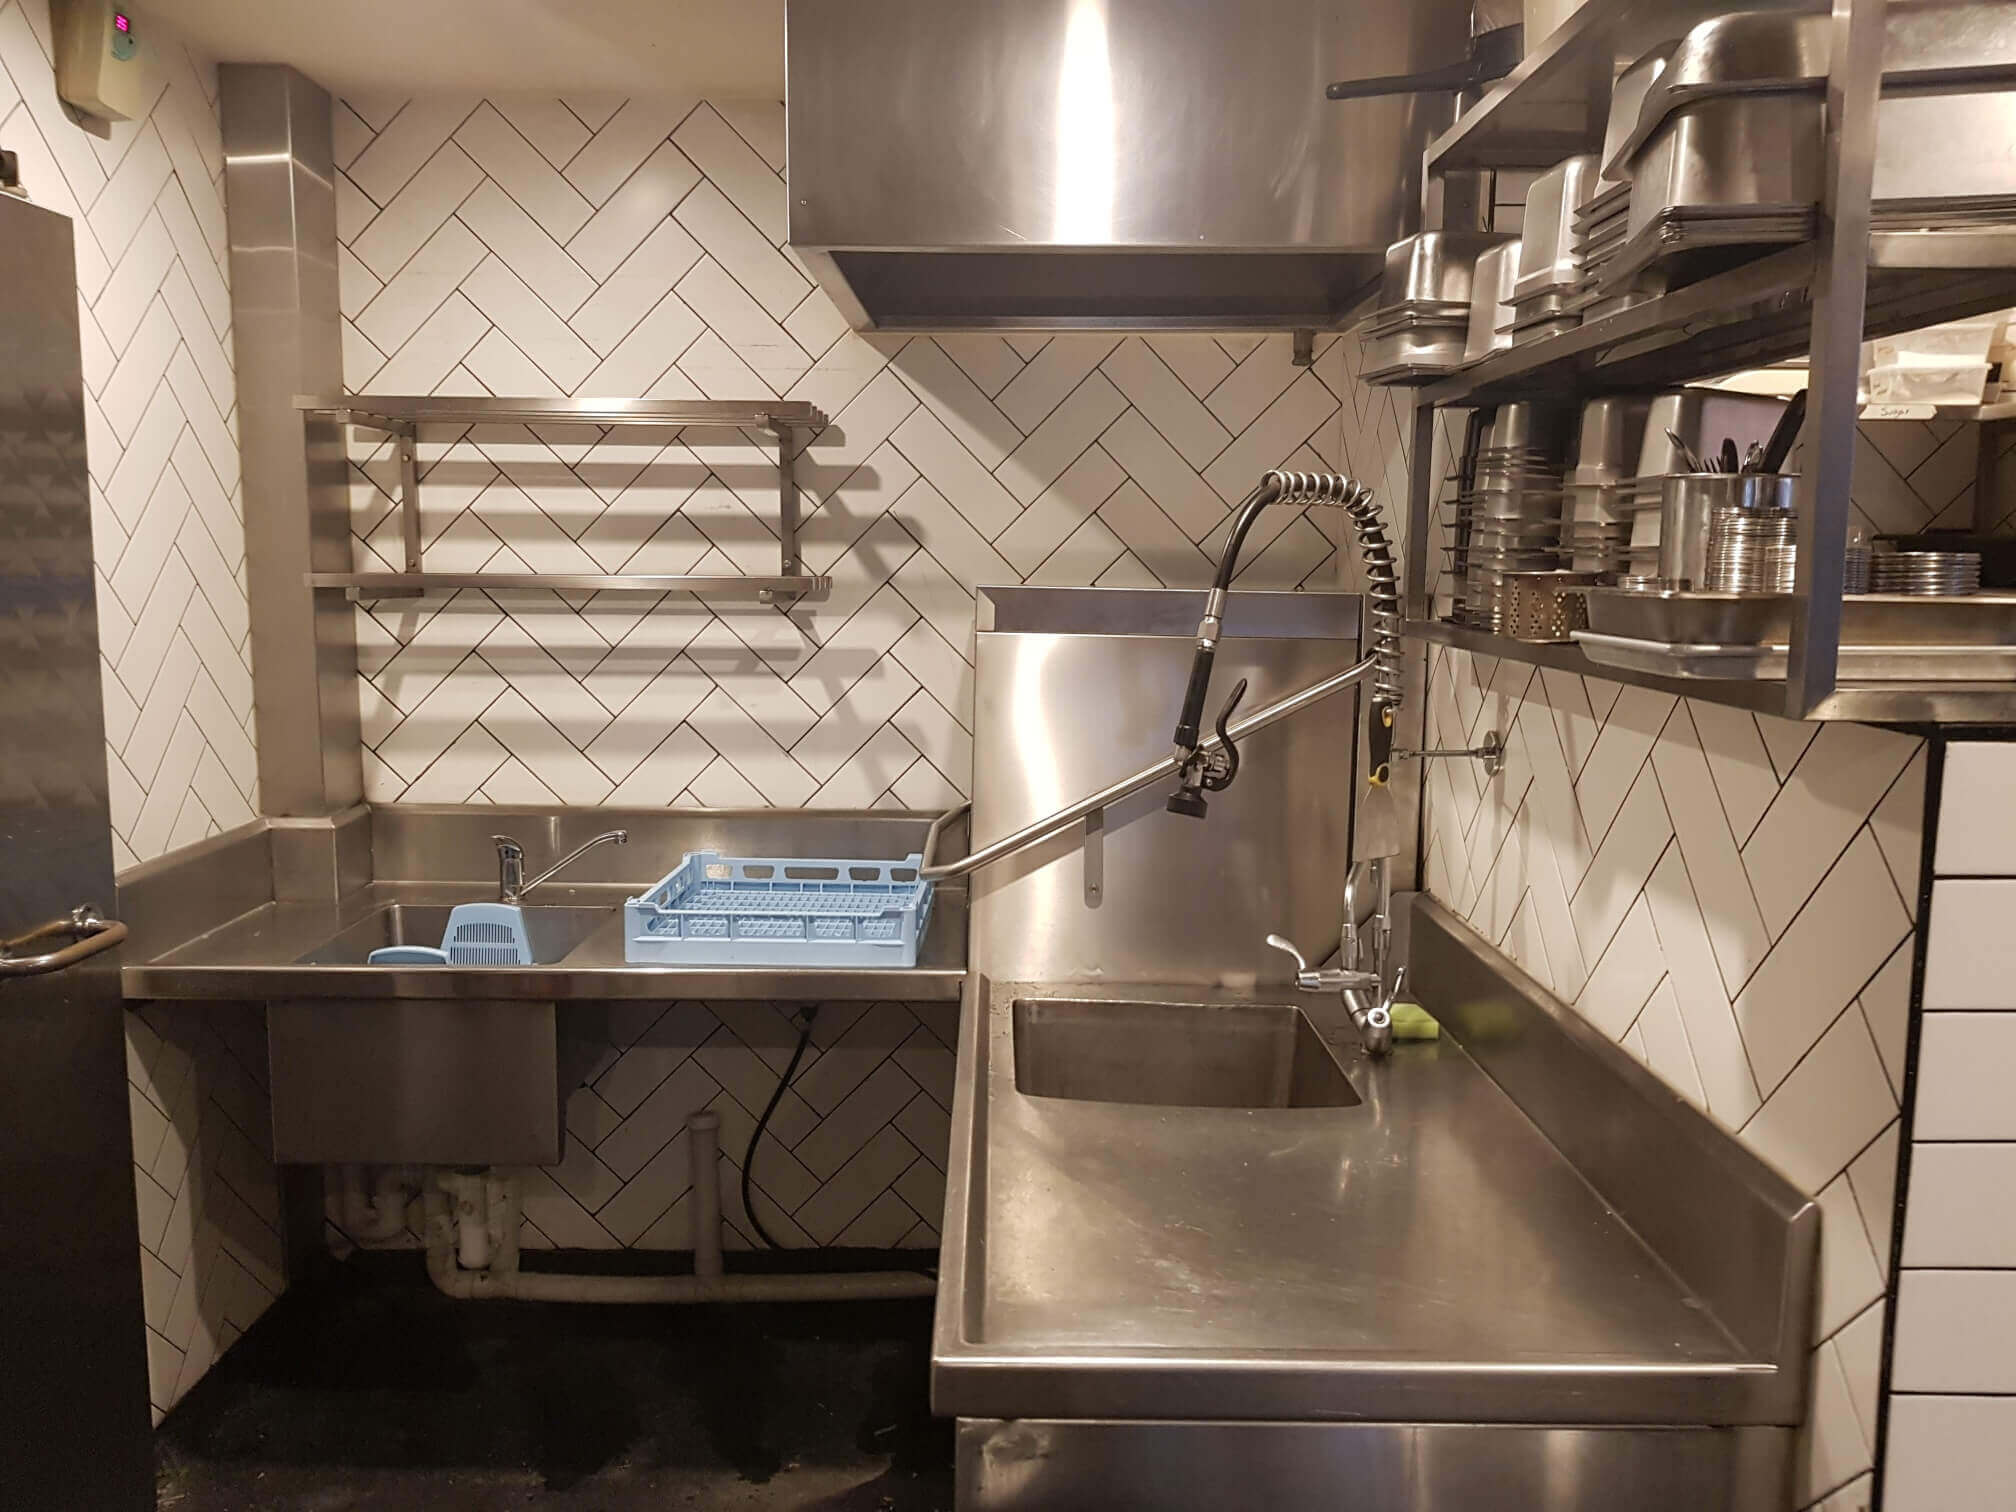 Pass Through dishwasher recently installed by Warewashing Solutions